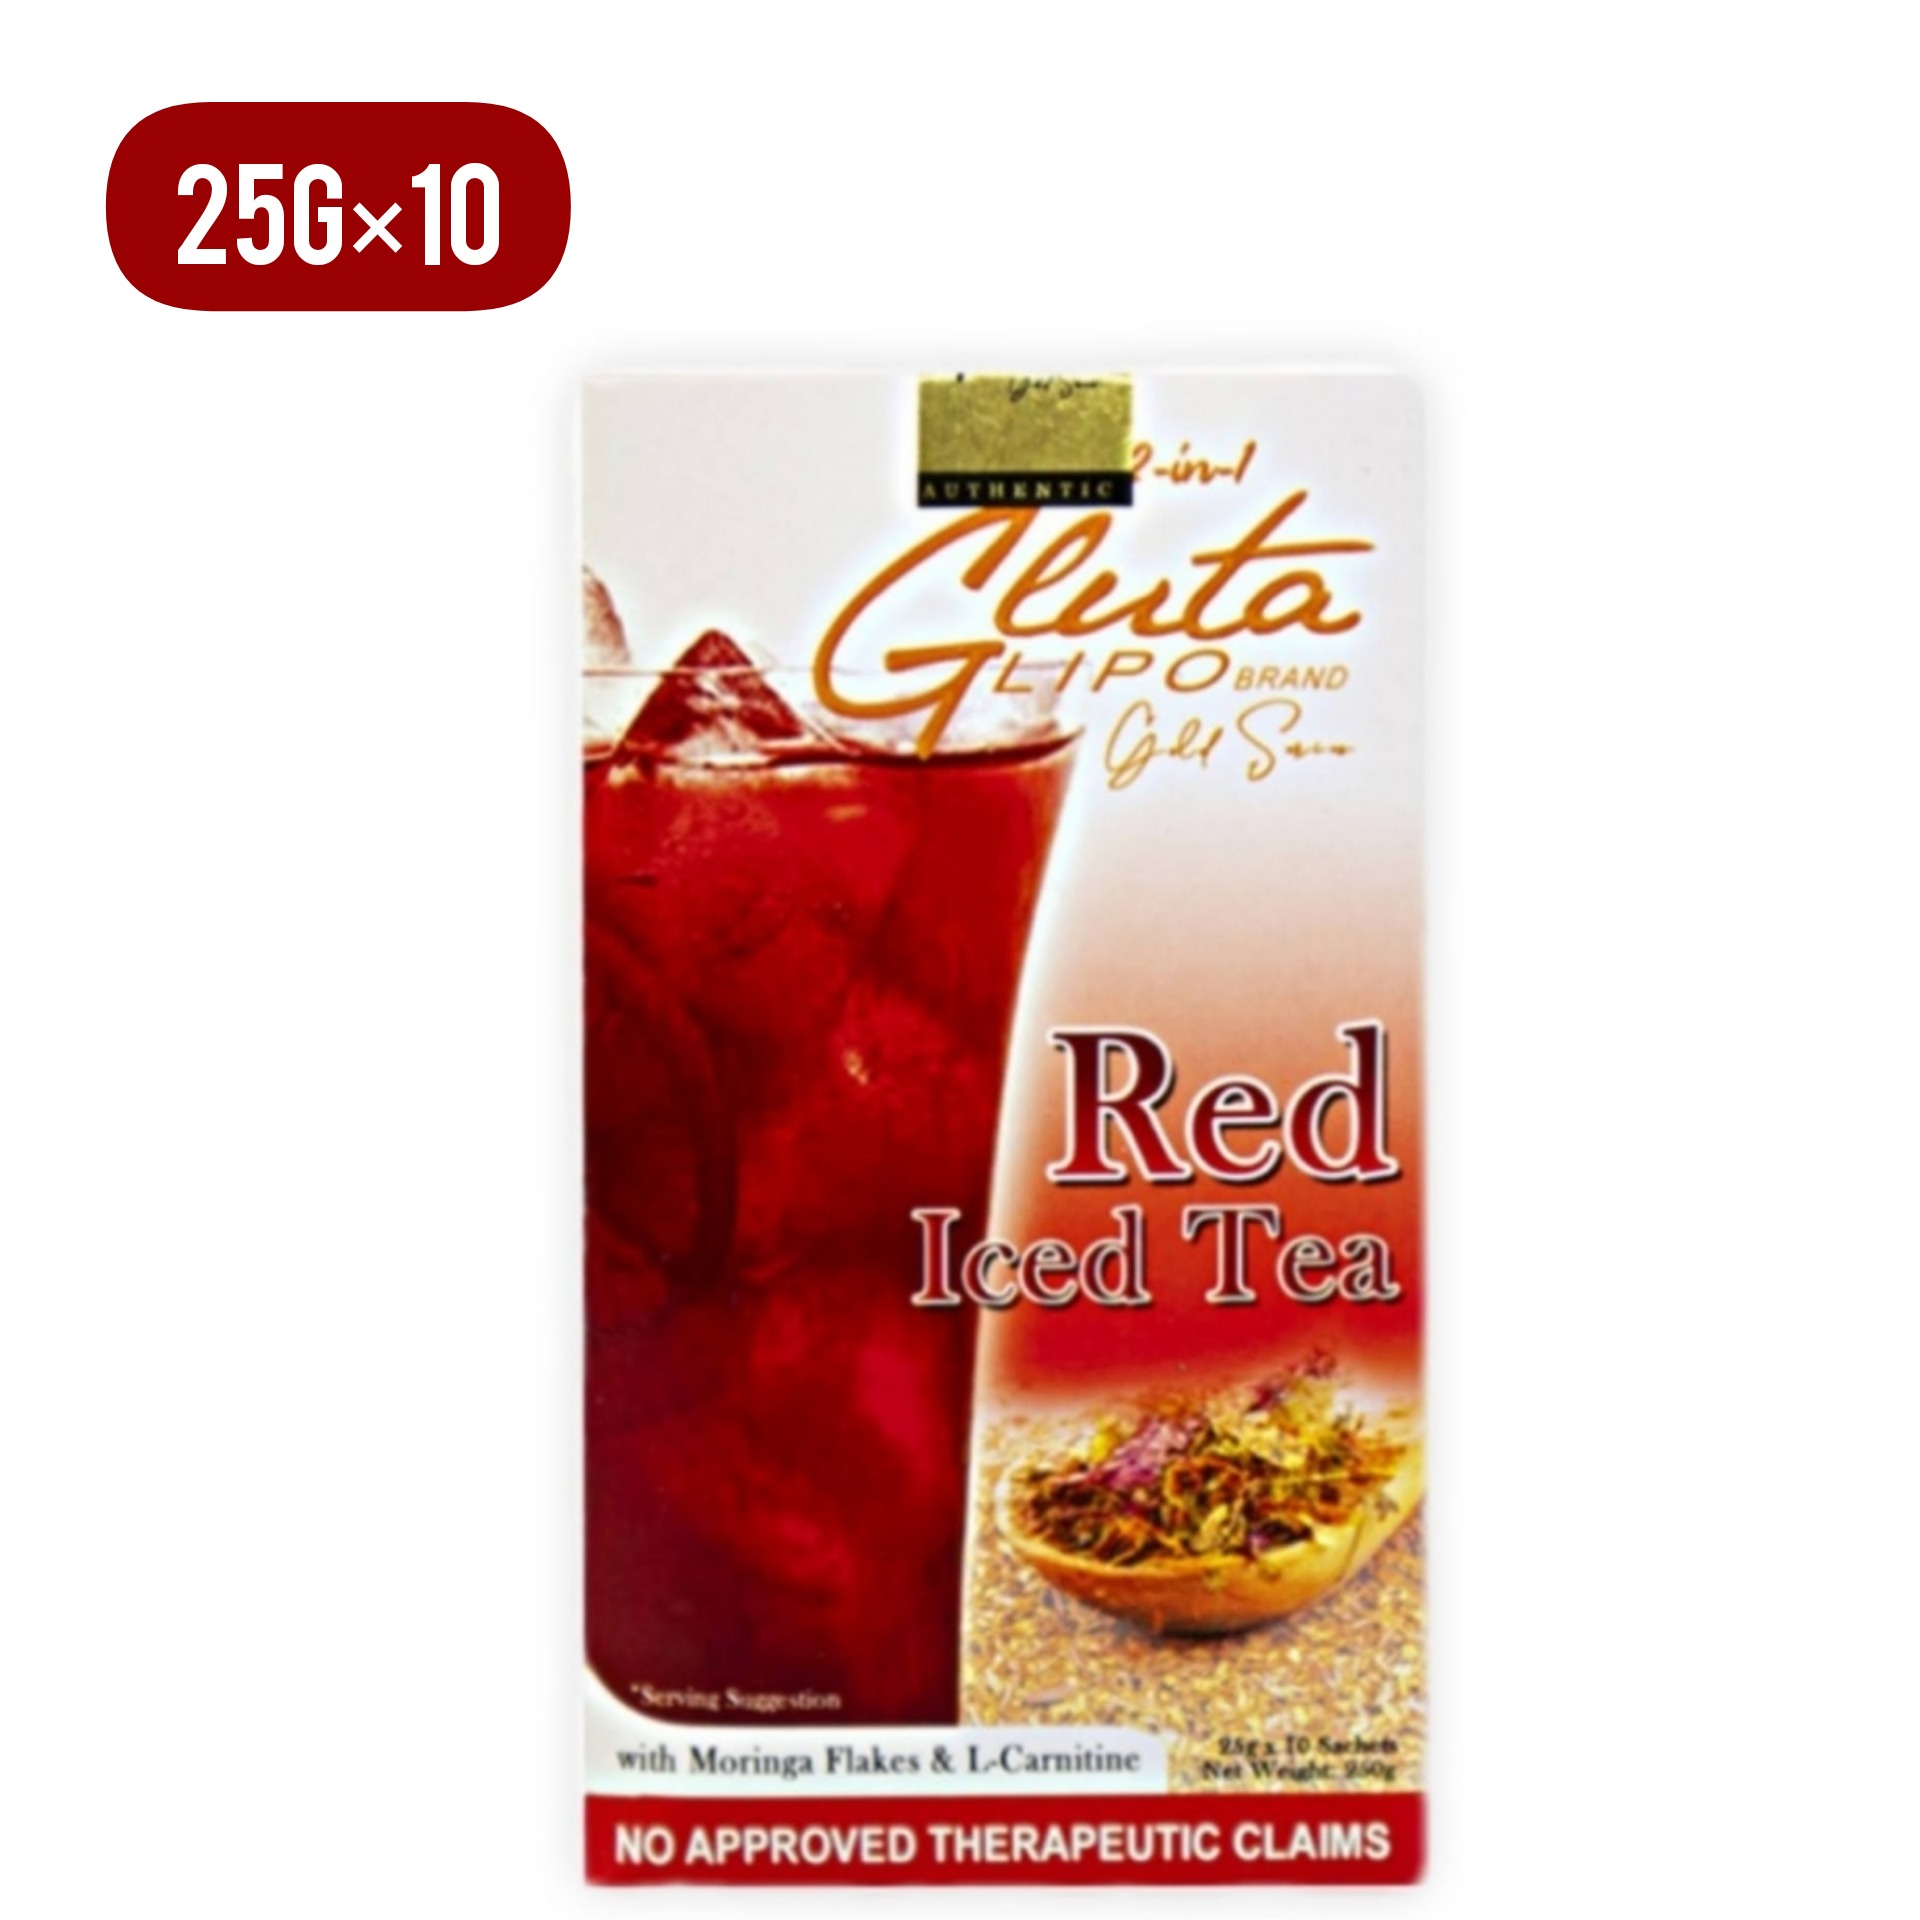 (Food) 2 IN 1 Gluta Lipo Brand Red Iced Tea (10X25G) (Cargo)